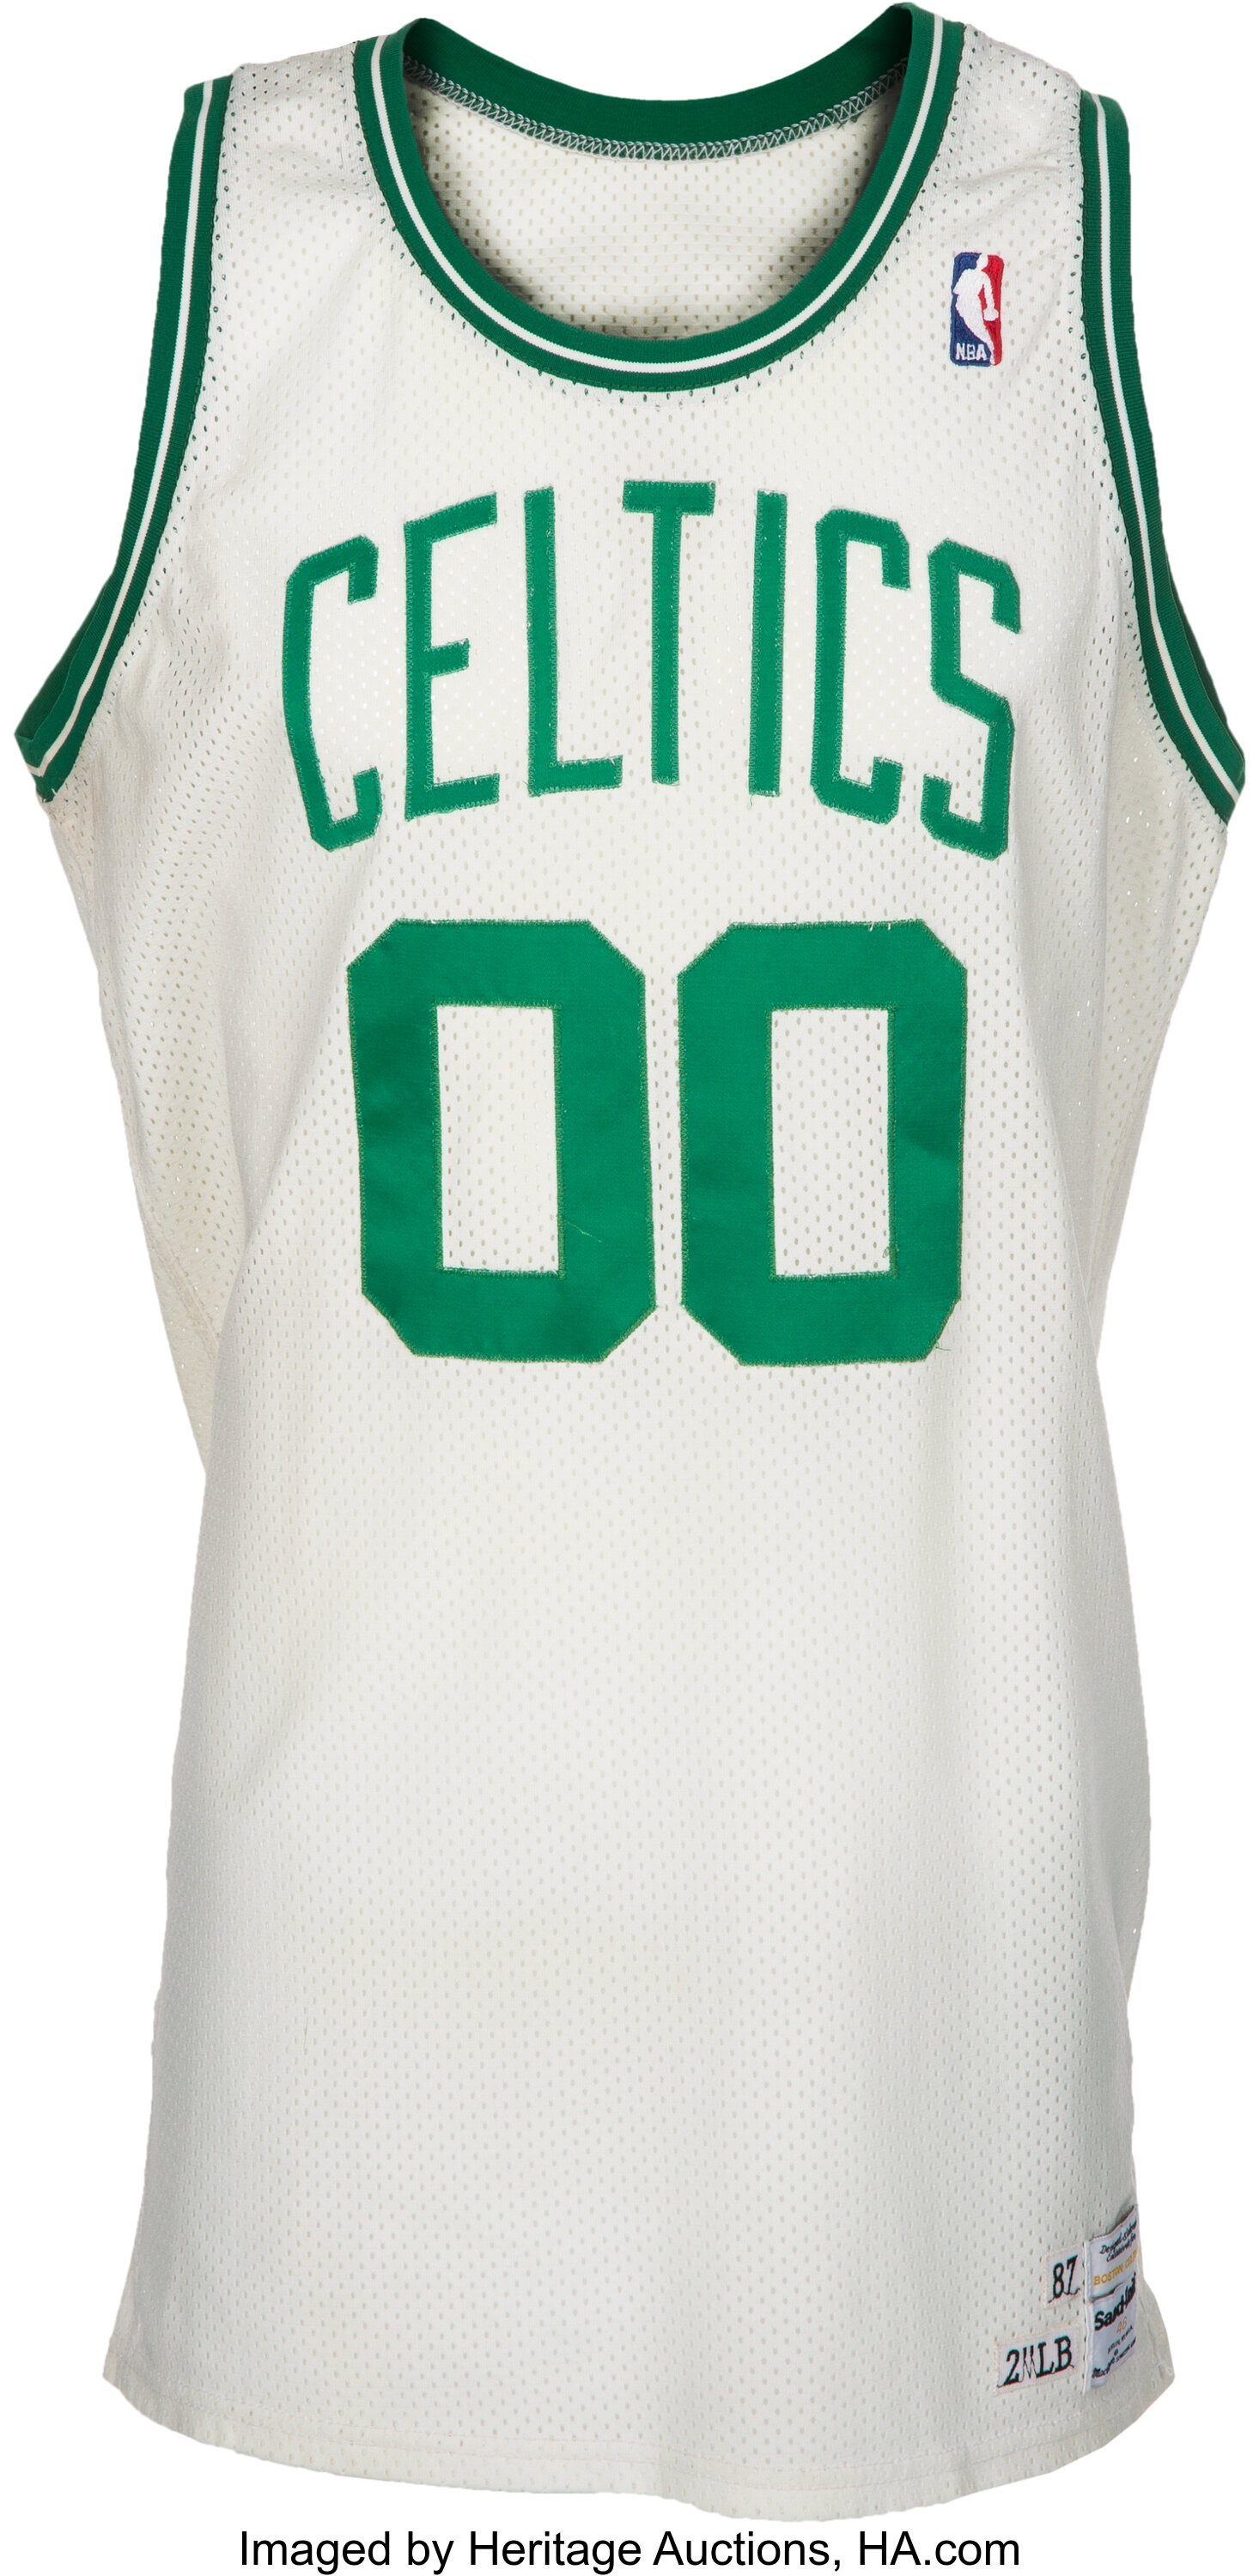 Lot Detail - Robert Parish 1990-91 Boston Celtics Game Used Home Jersey